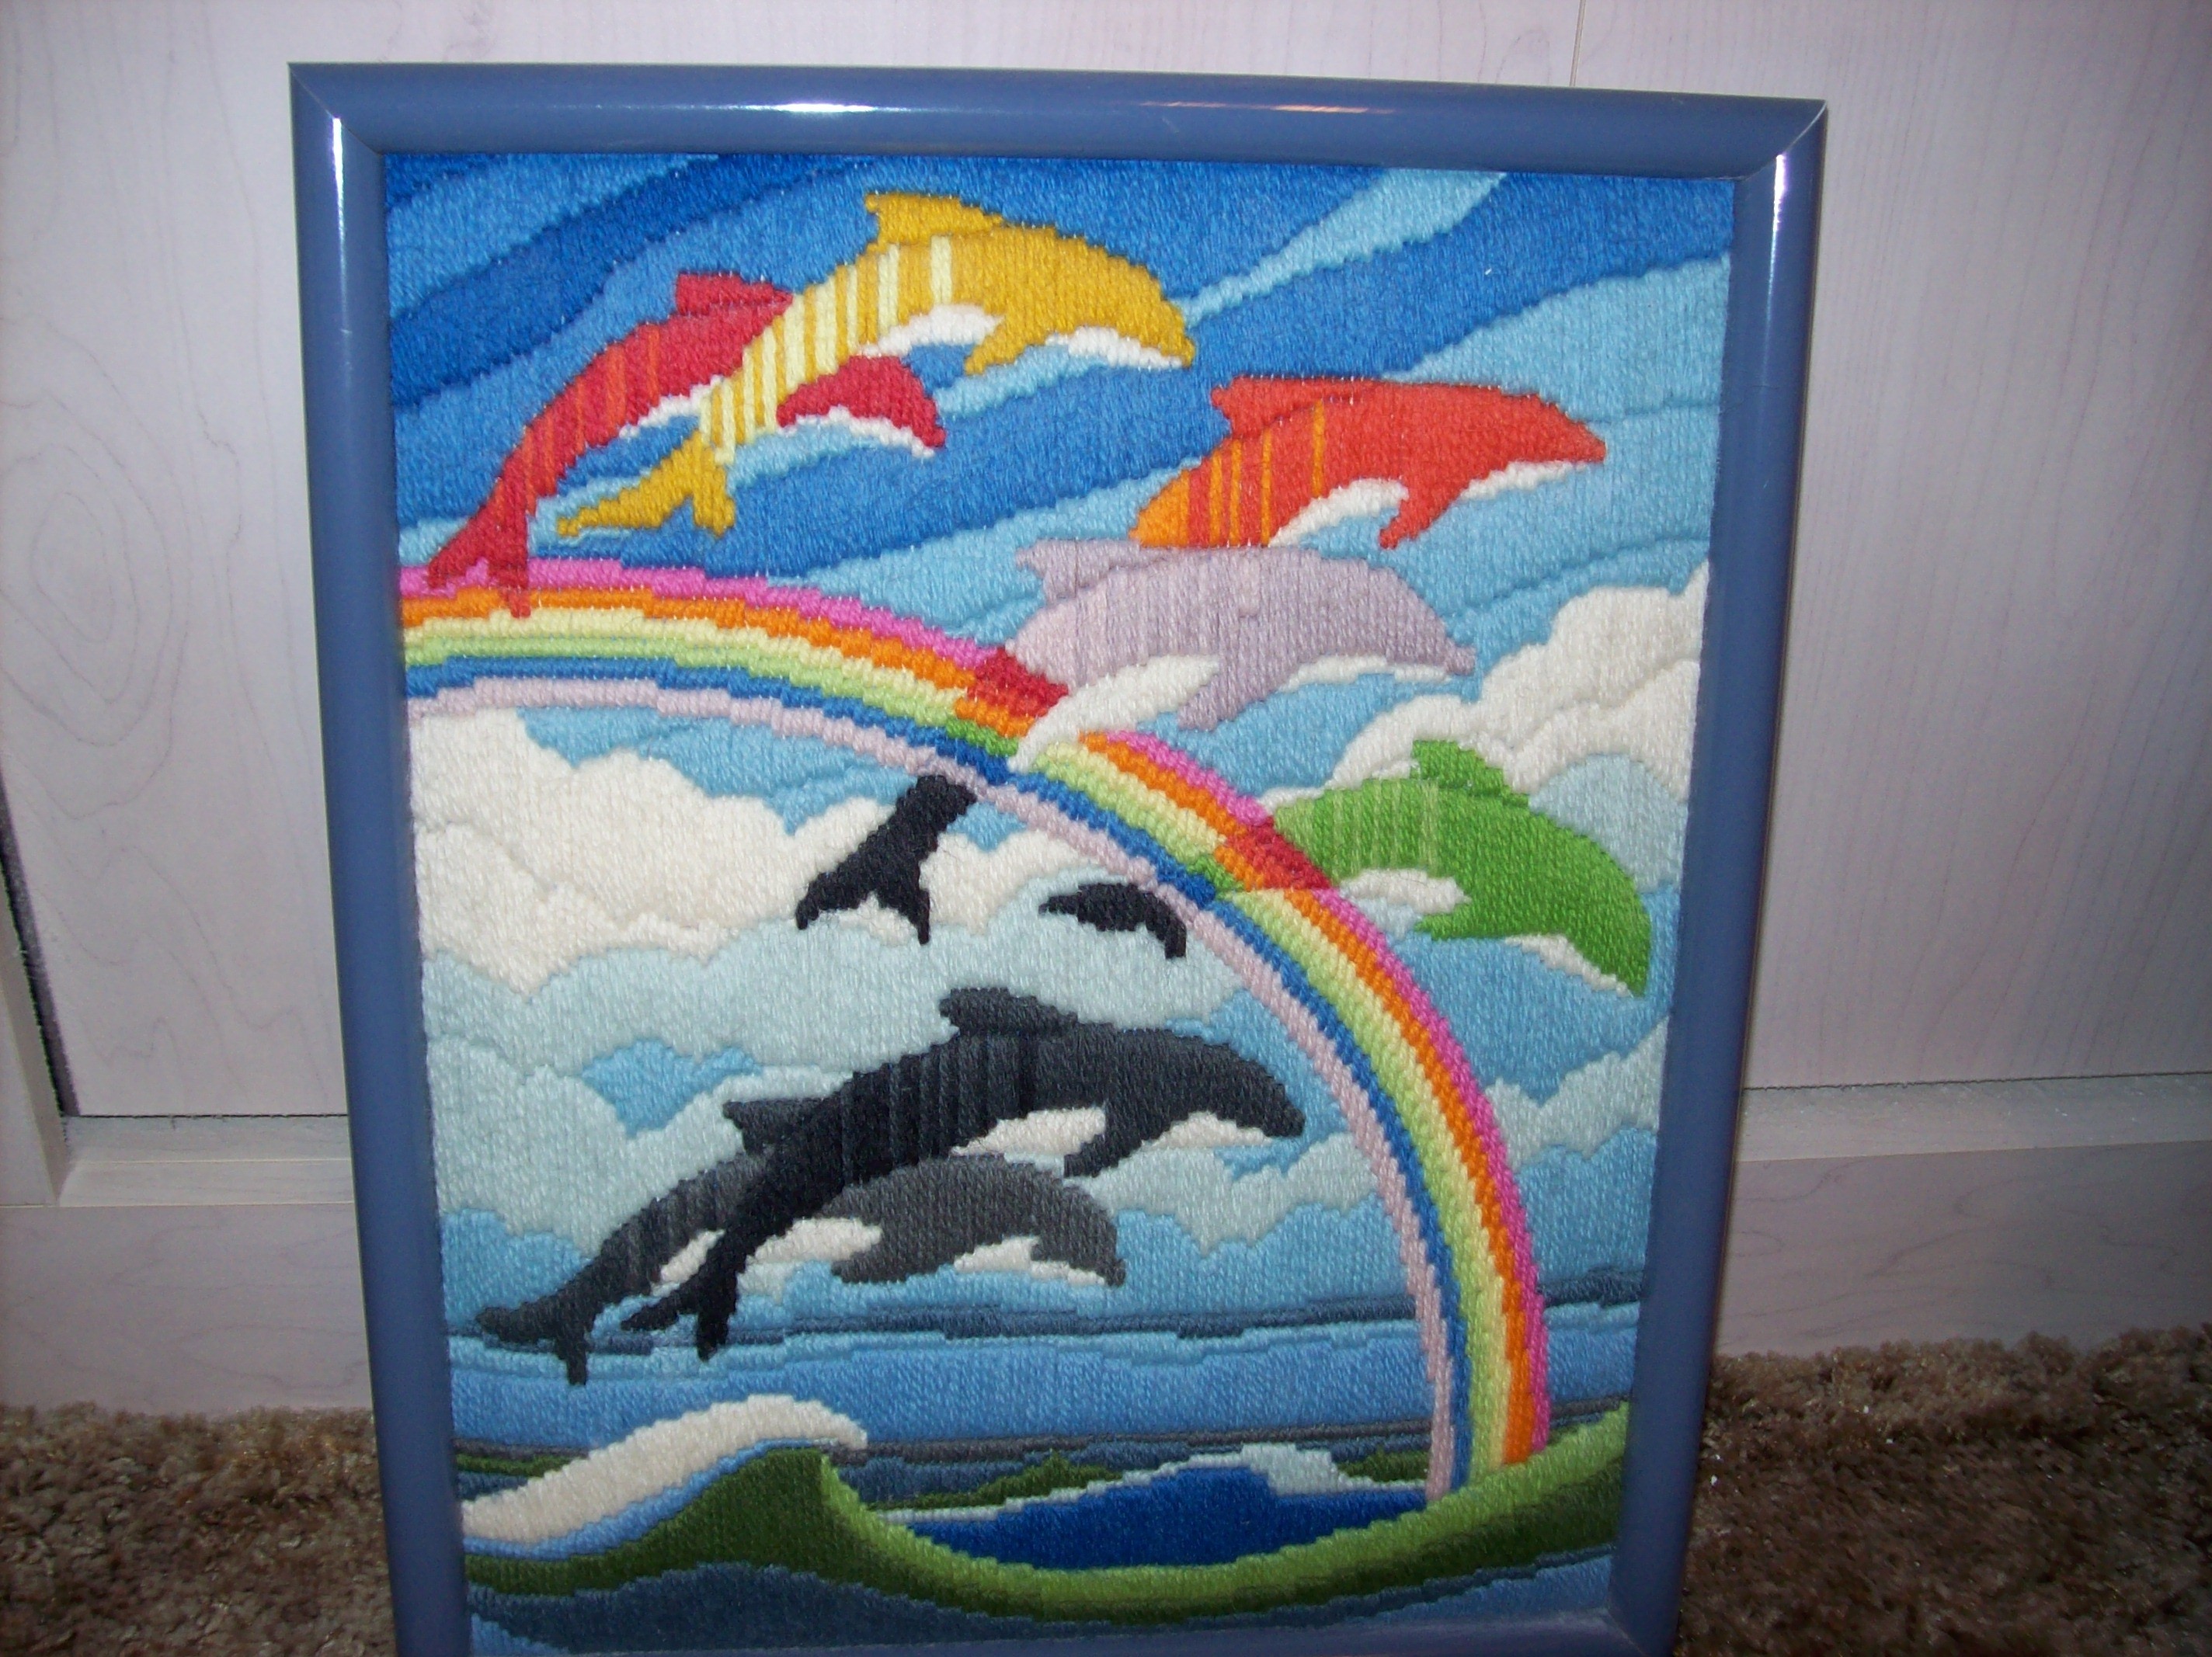 rainbowdolphins.jpg